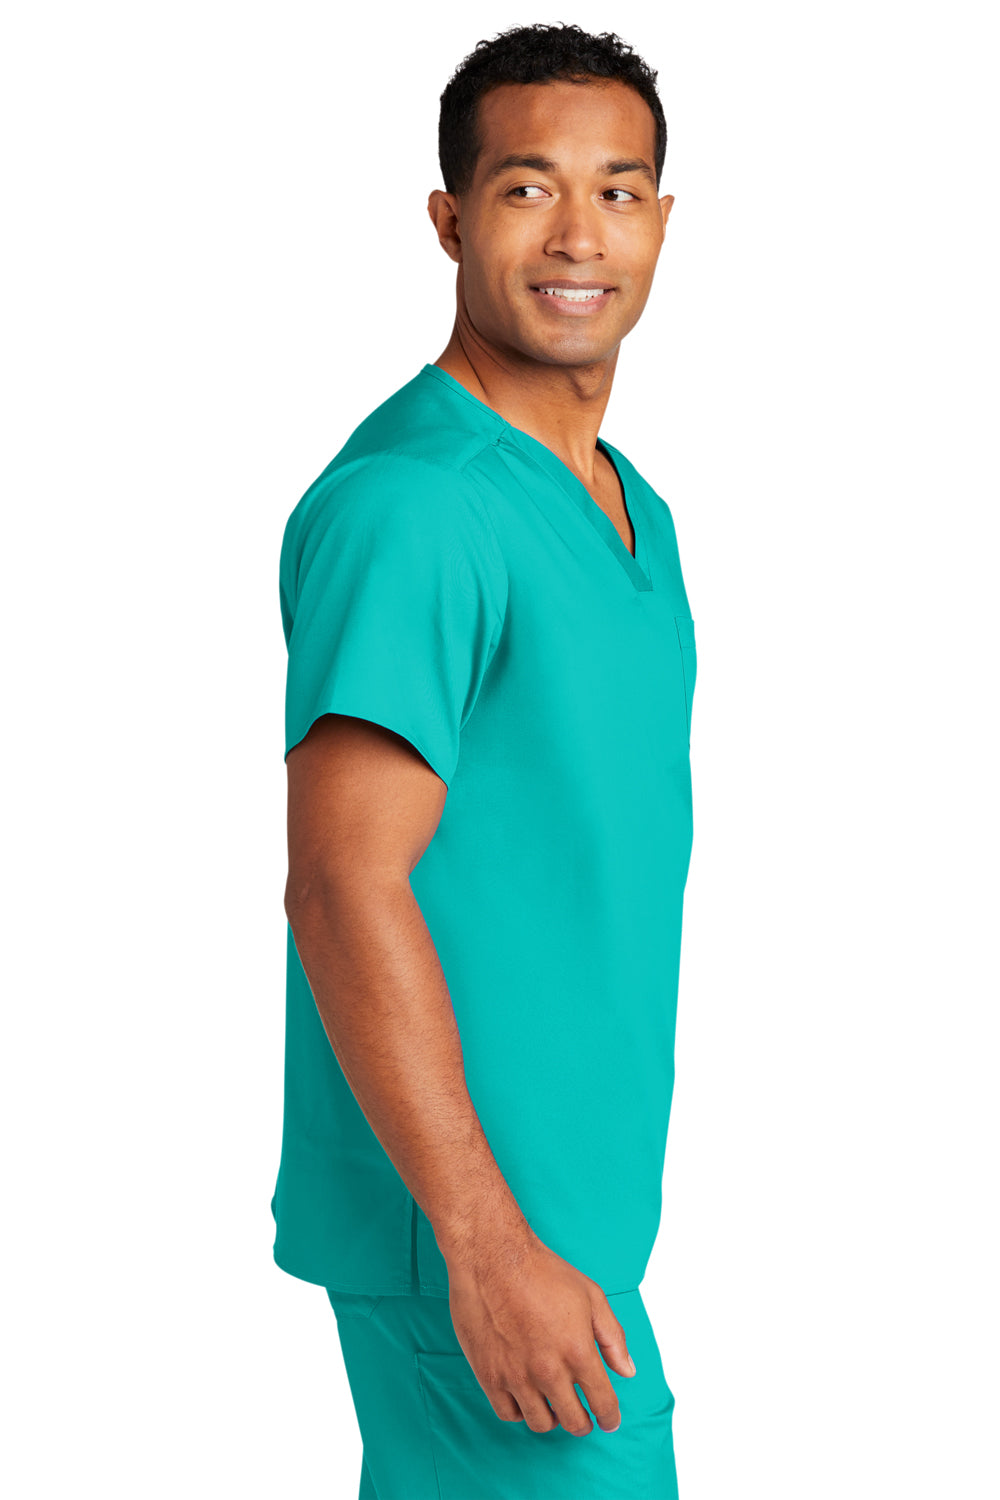 Wonderwink WW3160 WorkFlex Short Sleeve V-Neck Shirt w/ Pocket Teal Blue Side